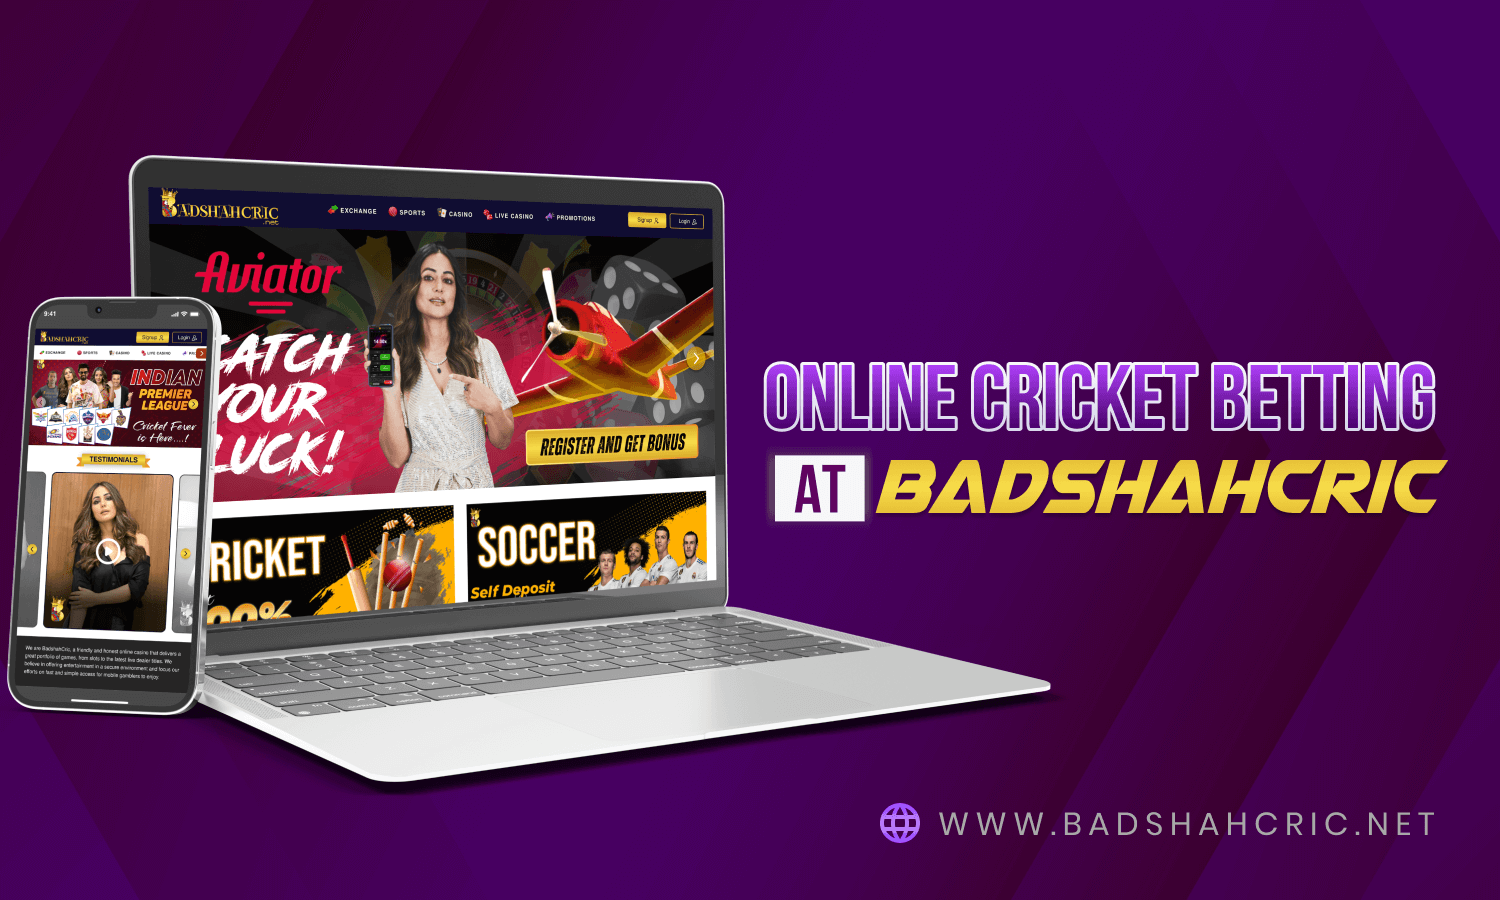 Badshahcric - Top Cricket Betting platform in India